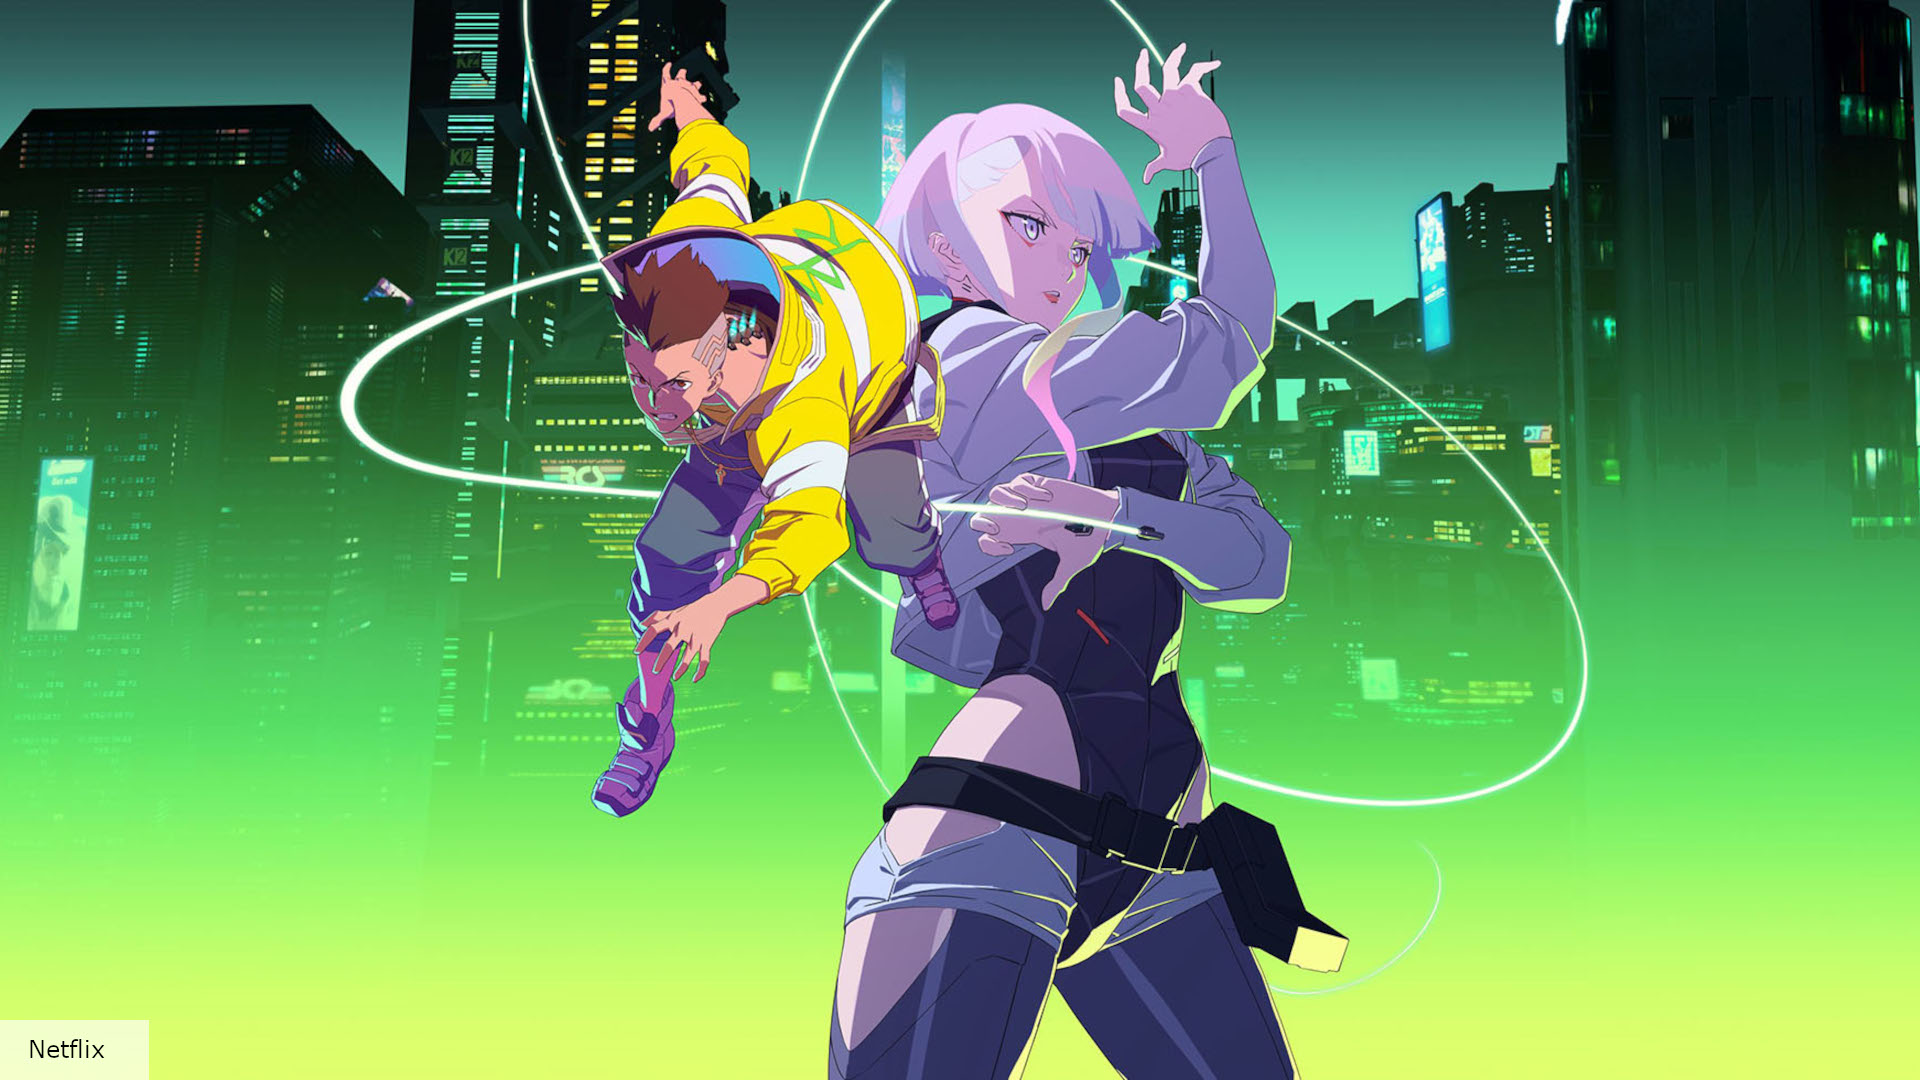 Cyberpunk 2077 Netflix anime series will release in September. The Digital Fix